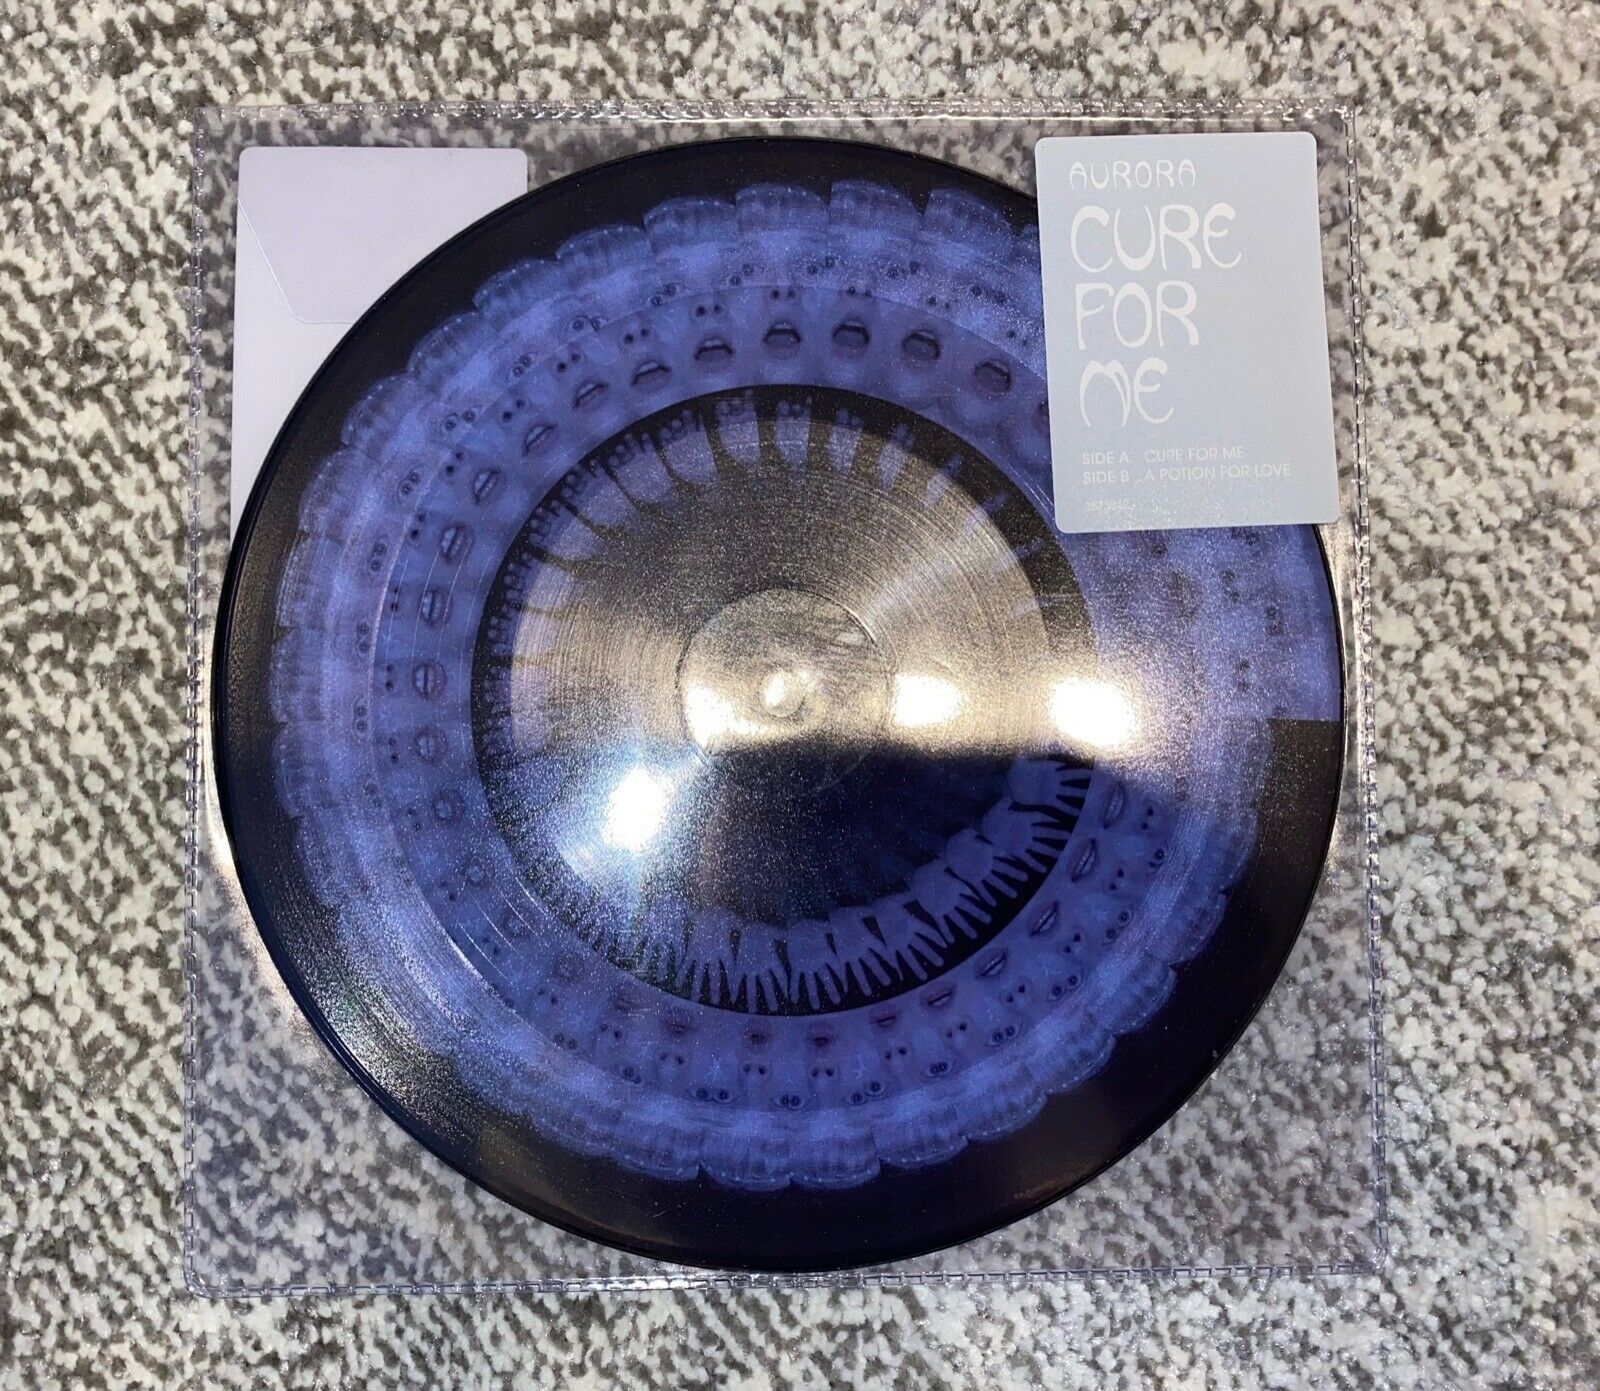  7 picture disc vinyl single AURORA Cure for Me